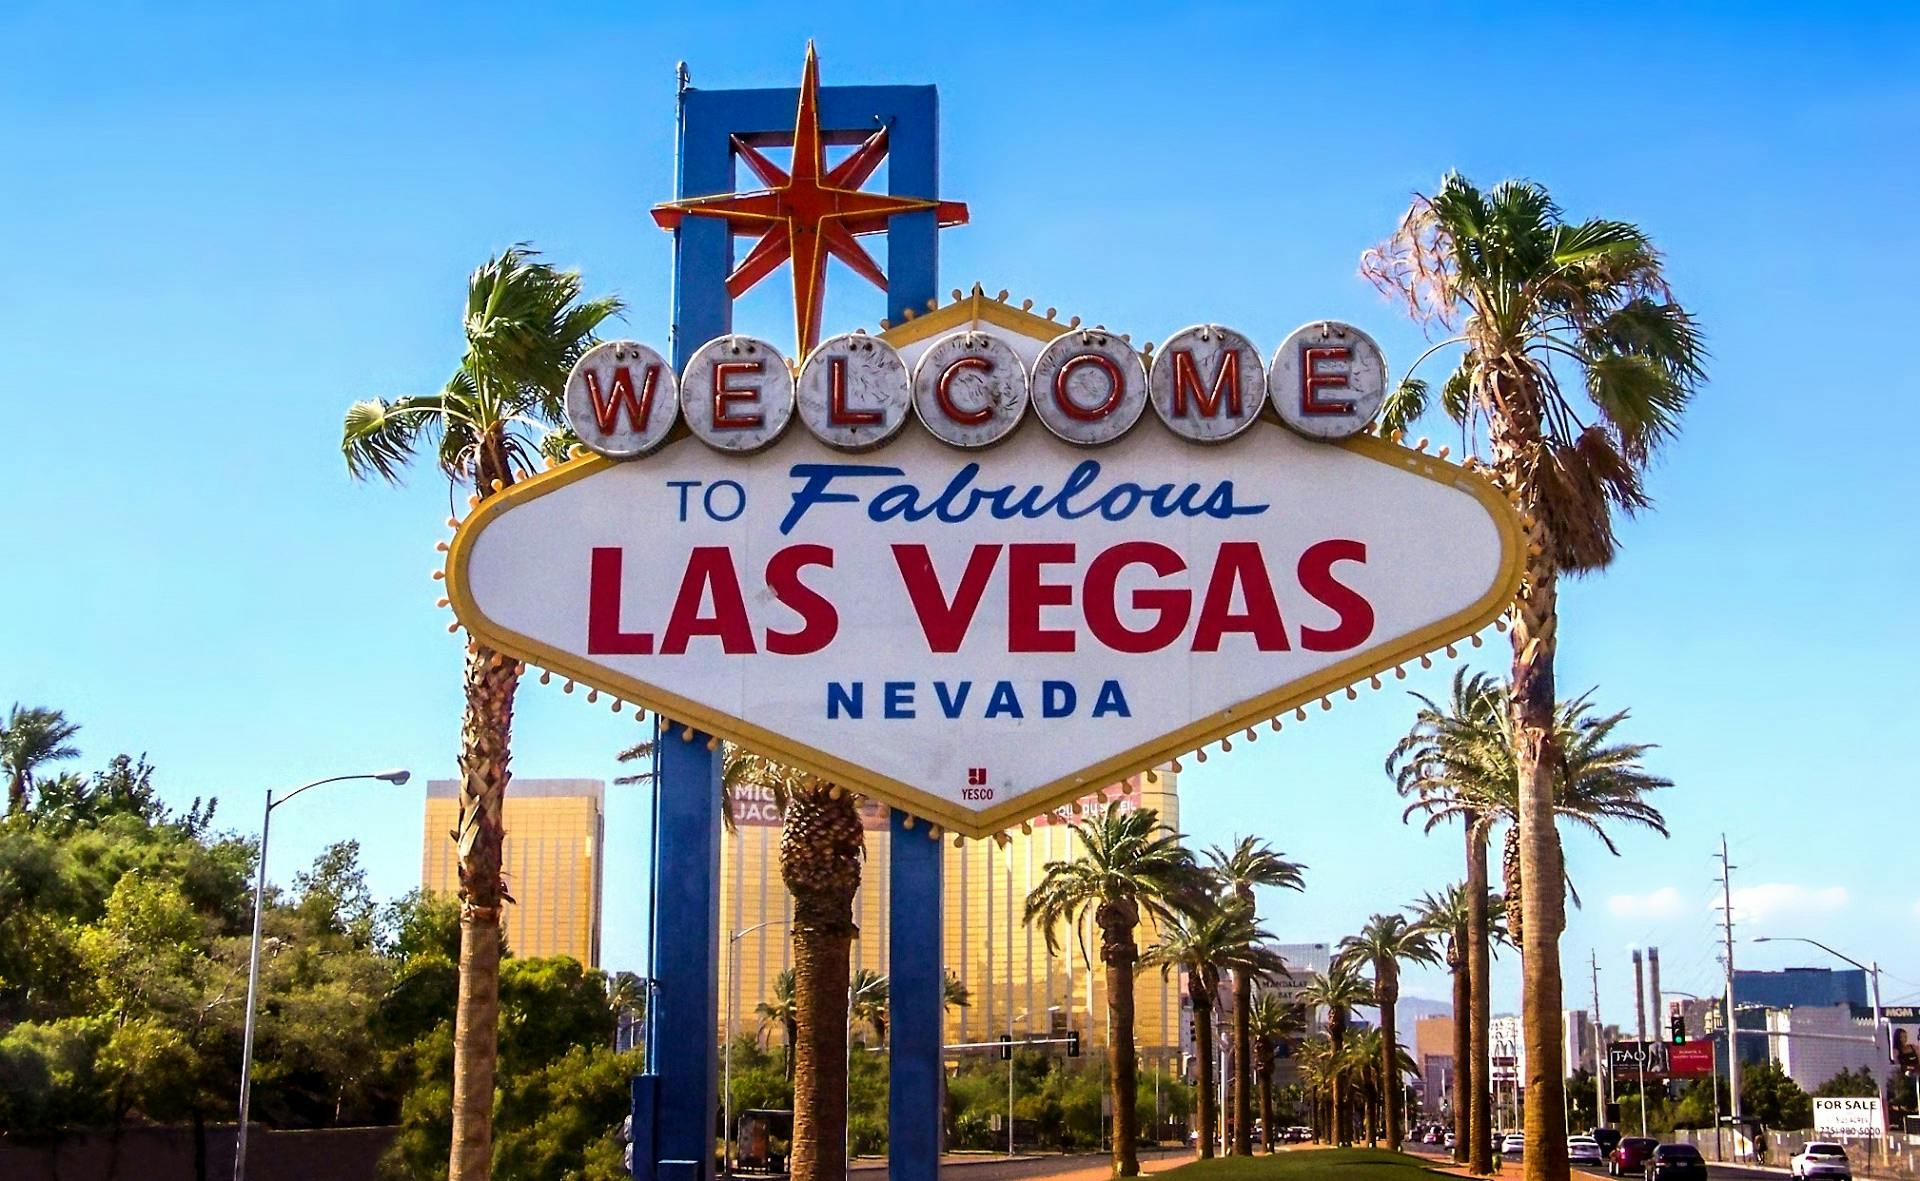 "Welcome to Fabulous Las Vegas Nevada" signage. | Photo: Pexels